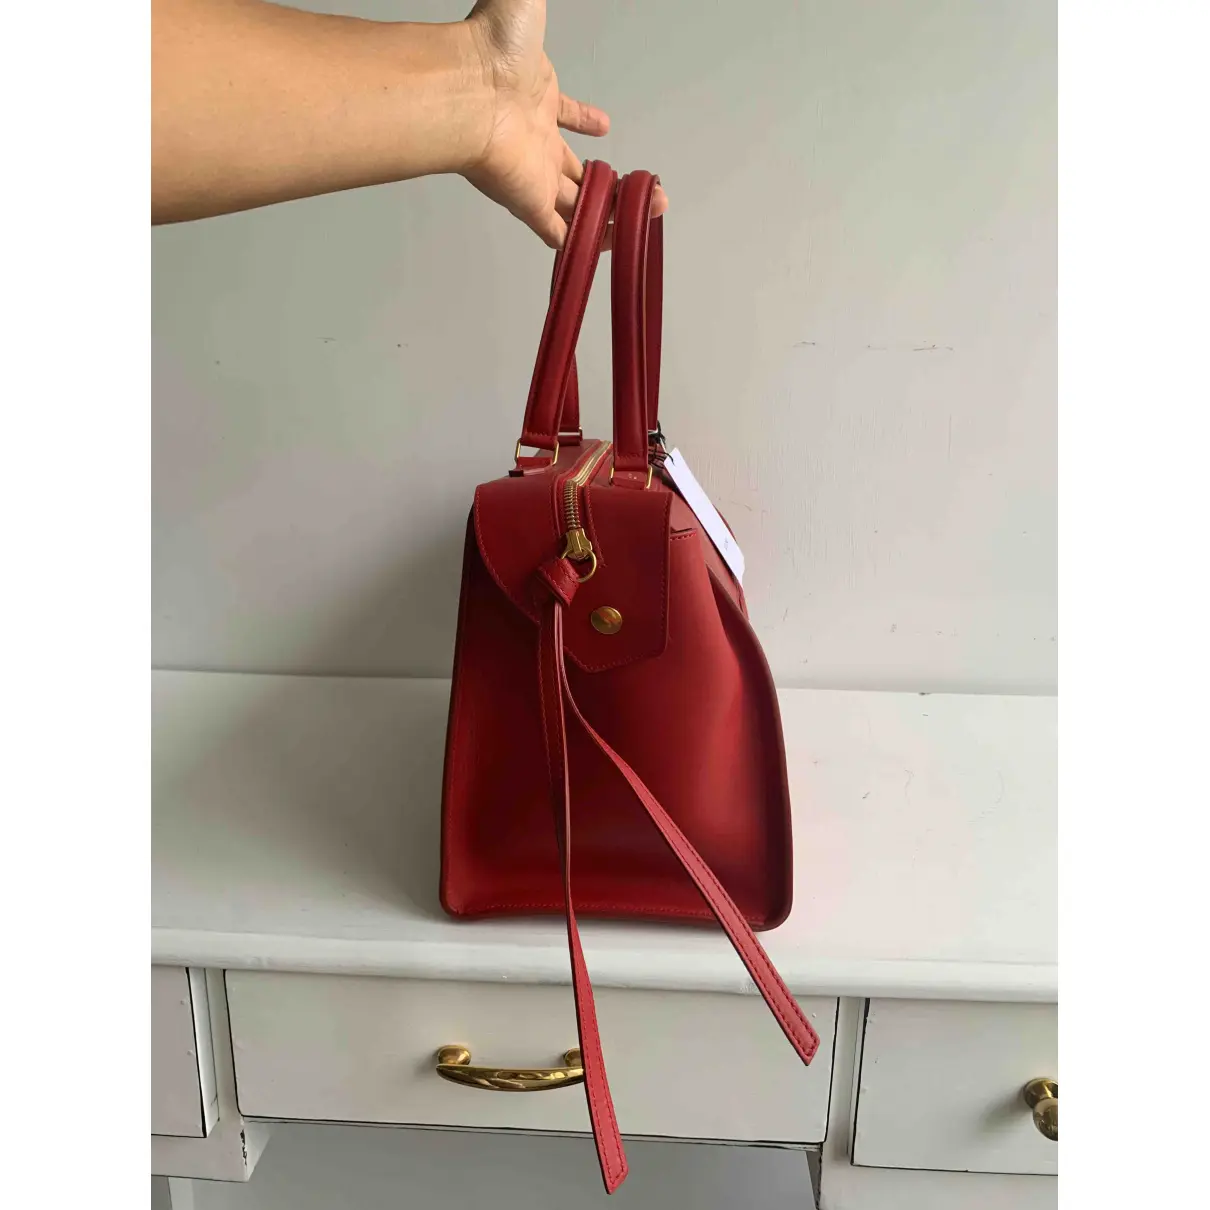 Buy Celine Ring leather handbag online